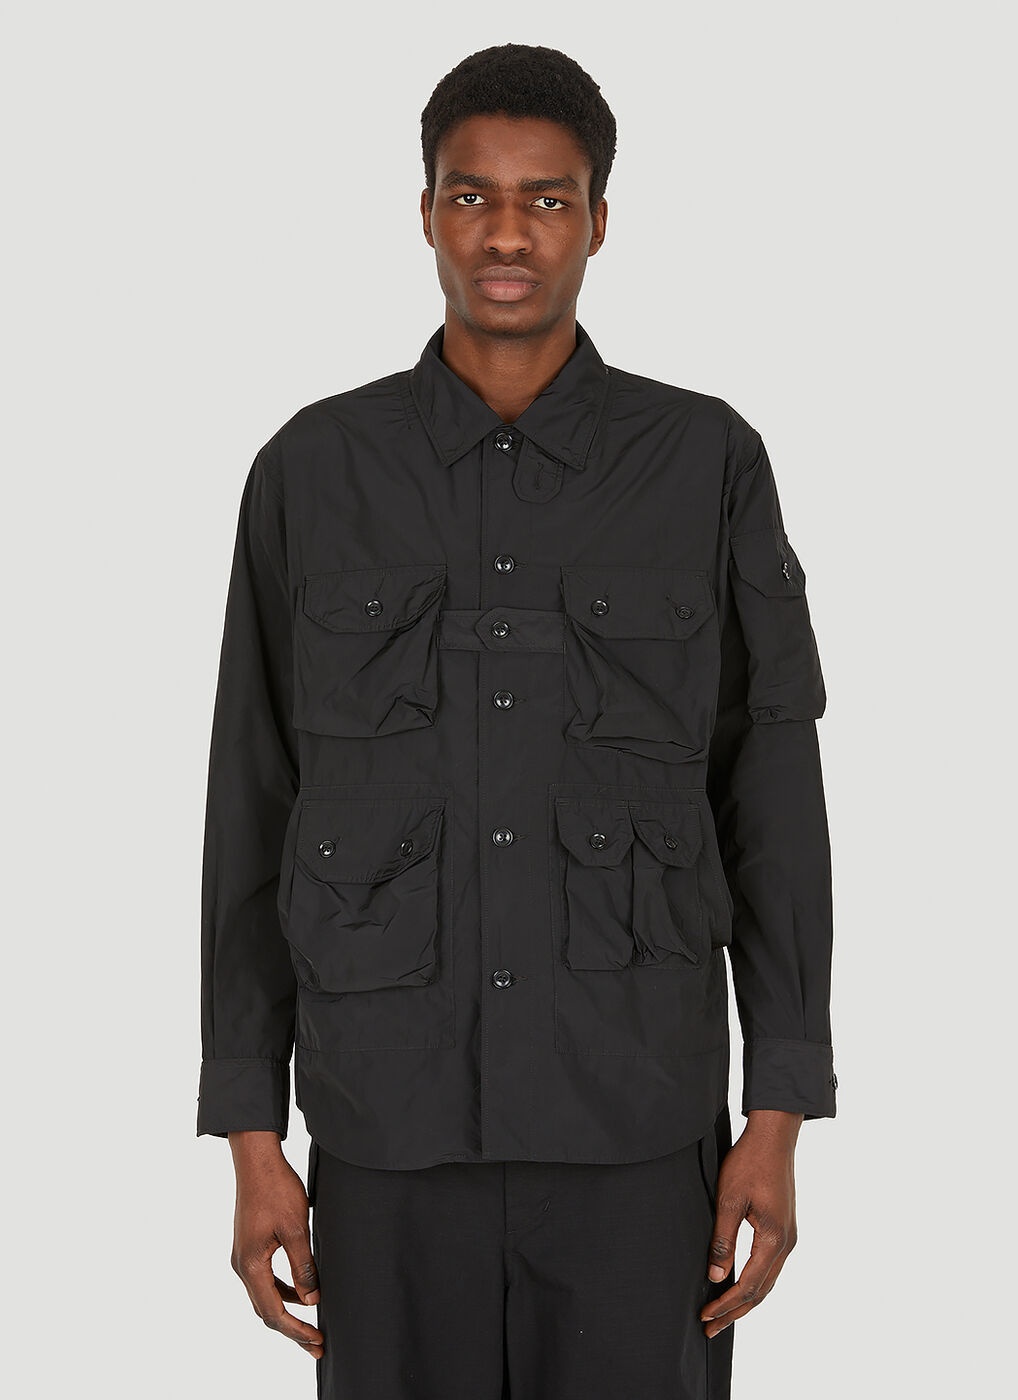 Explorer Shirt Jacket in Black Engineered Garments